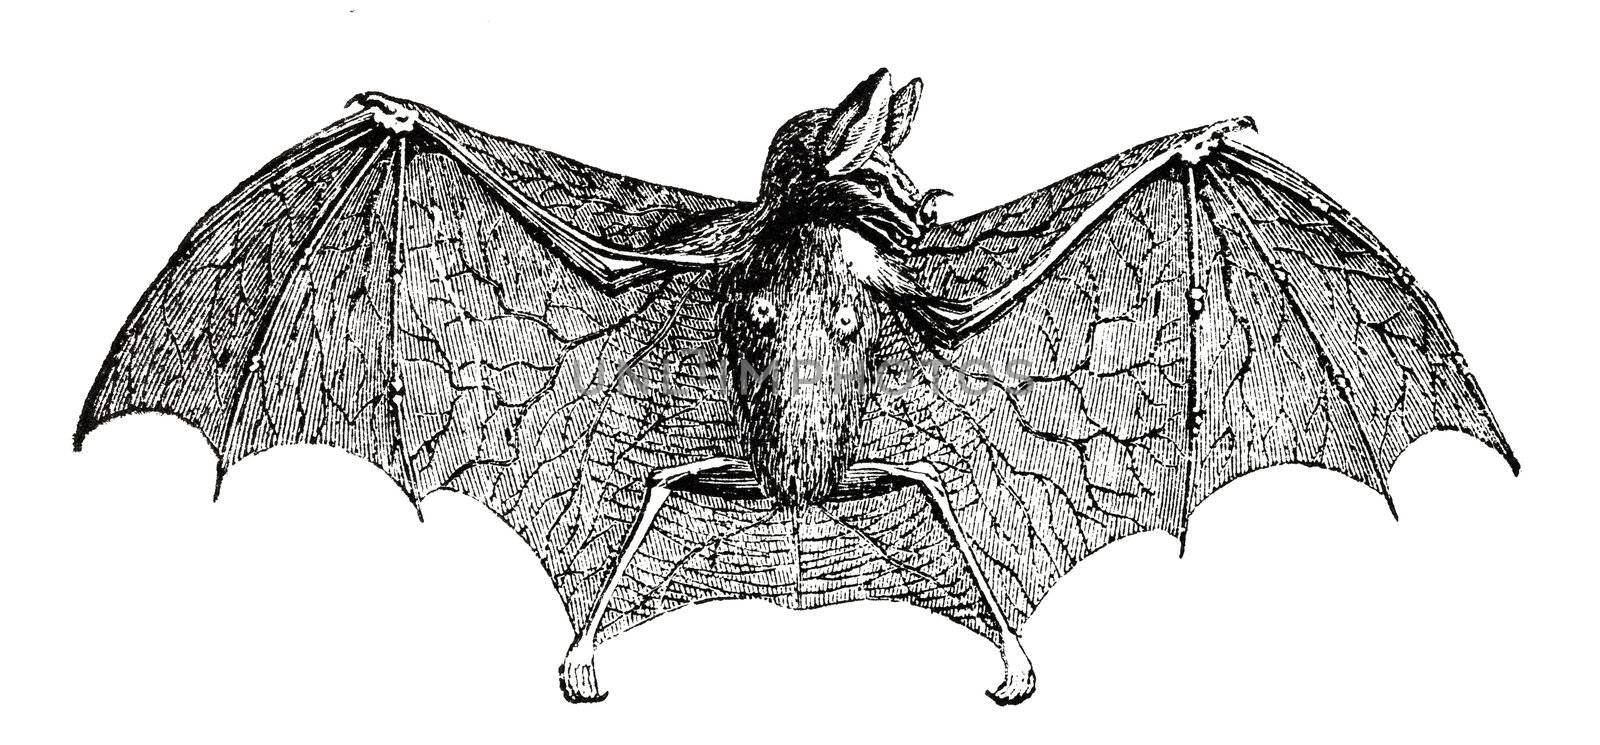 Bat, Bats, Vampire Bat by Picturepast